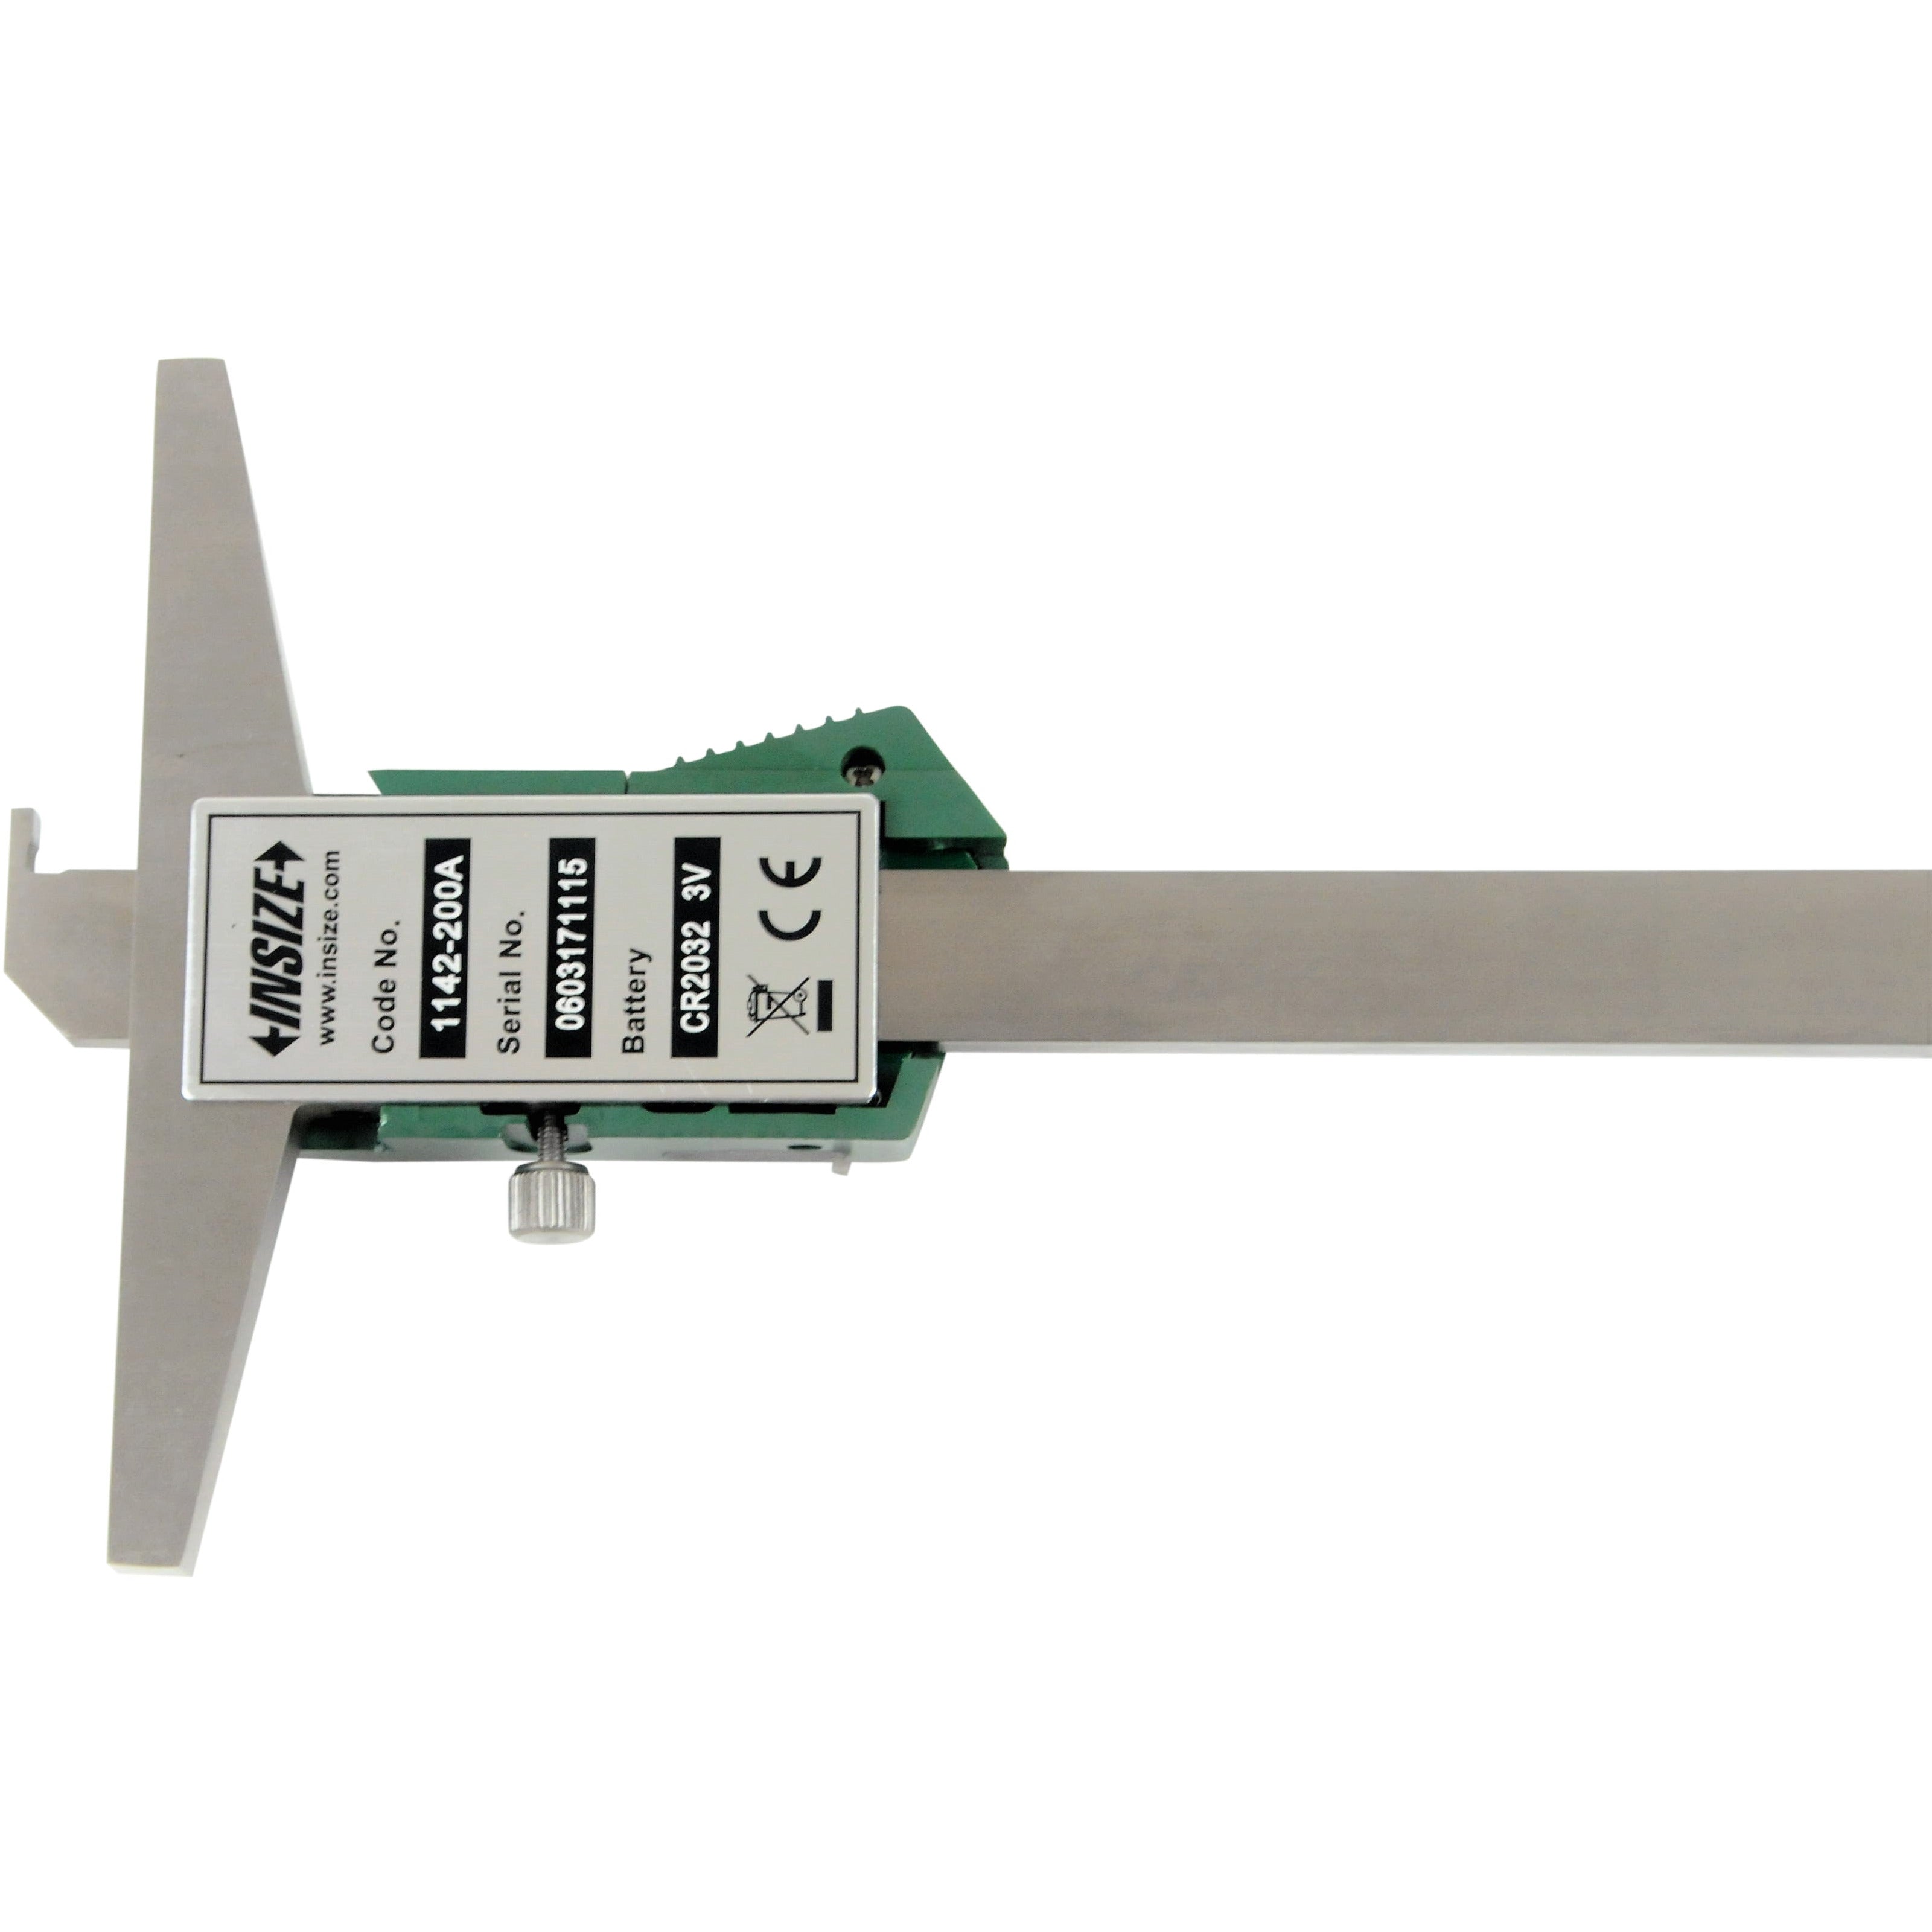 Insize Digital Hook Depth Gauge 0-200mm / 0-8" Range Series 1142-200A